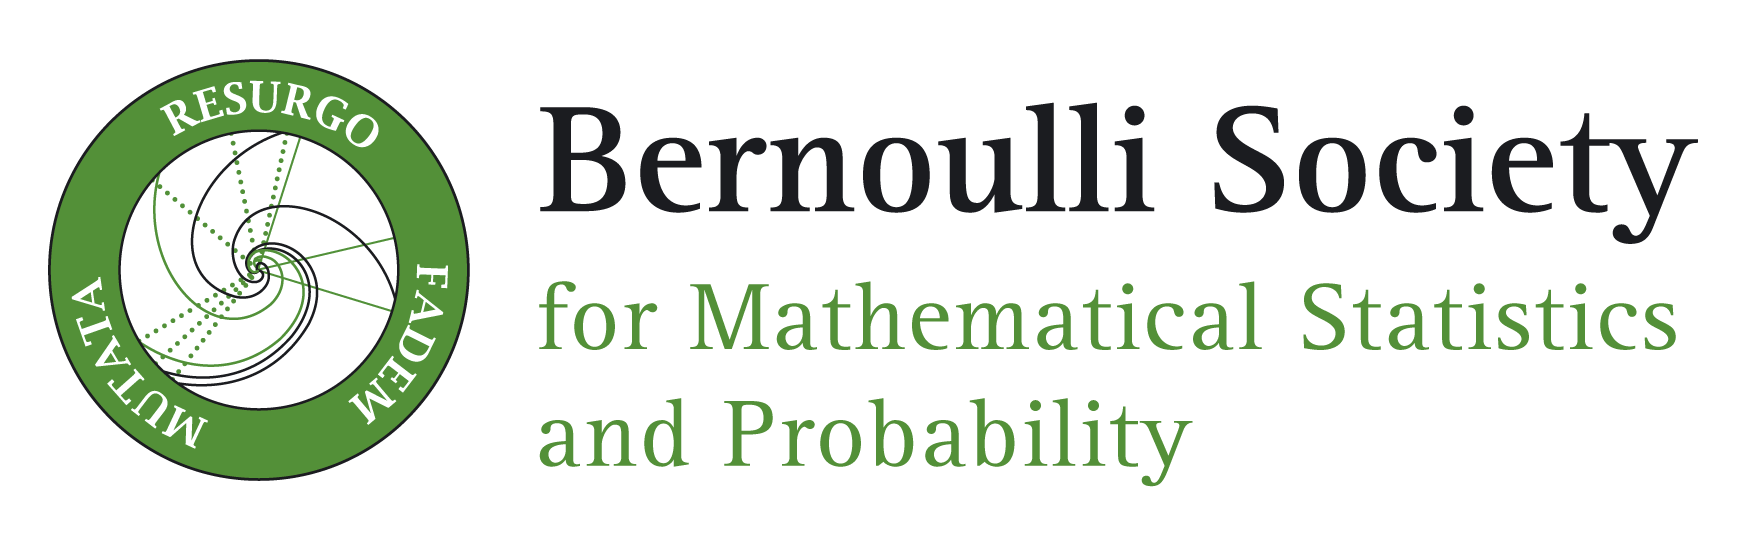 Logo of the Bernoulli Society